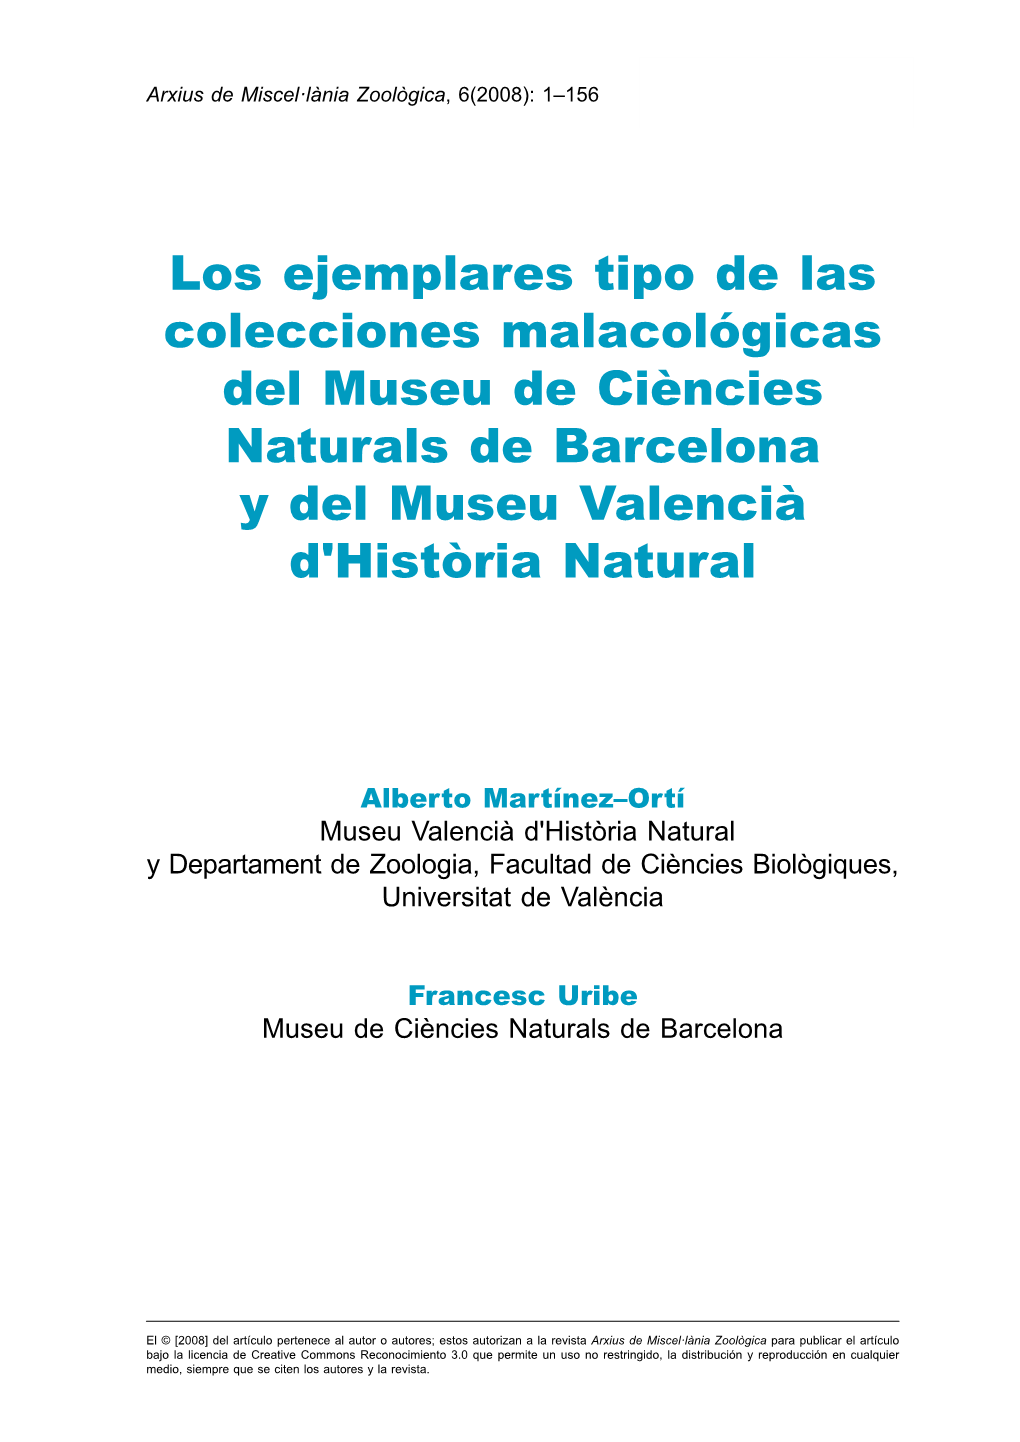 Los Ejemplares Tipo De Las Colecciones Malacológicas Del Museu De Ciències Naturals De Barcelona Y Del Museu Valencià D'història Natural